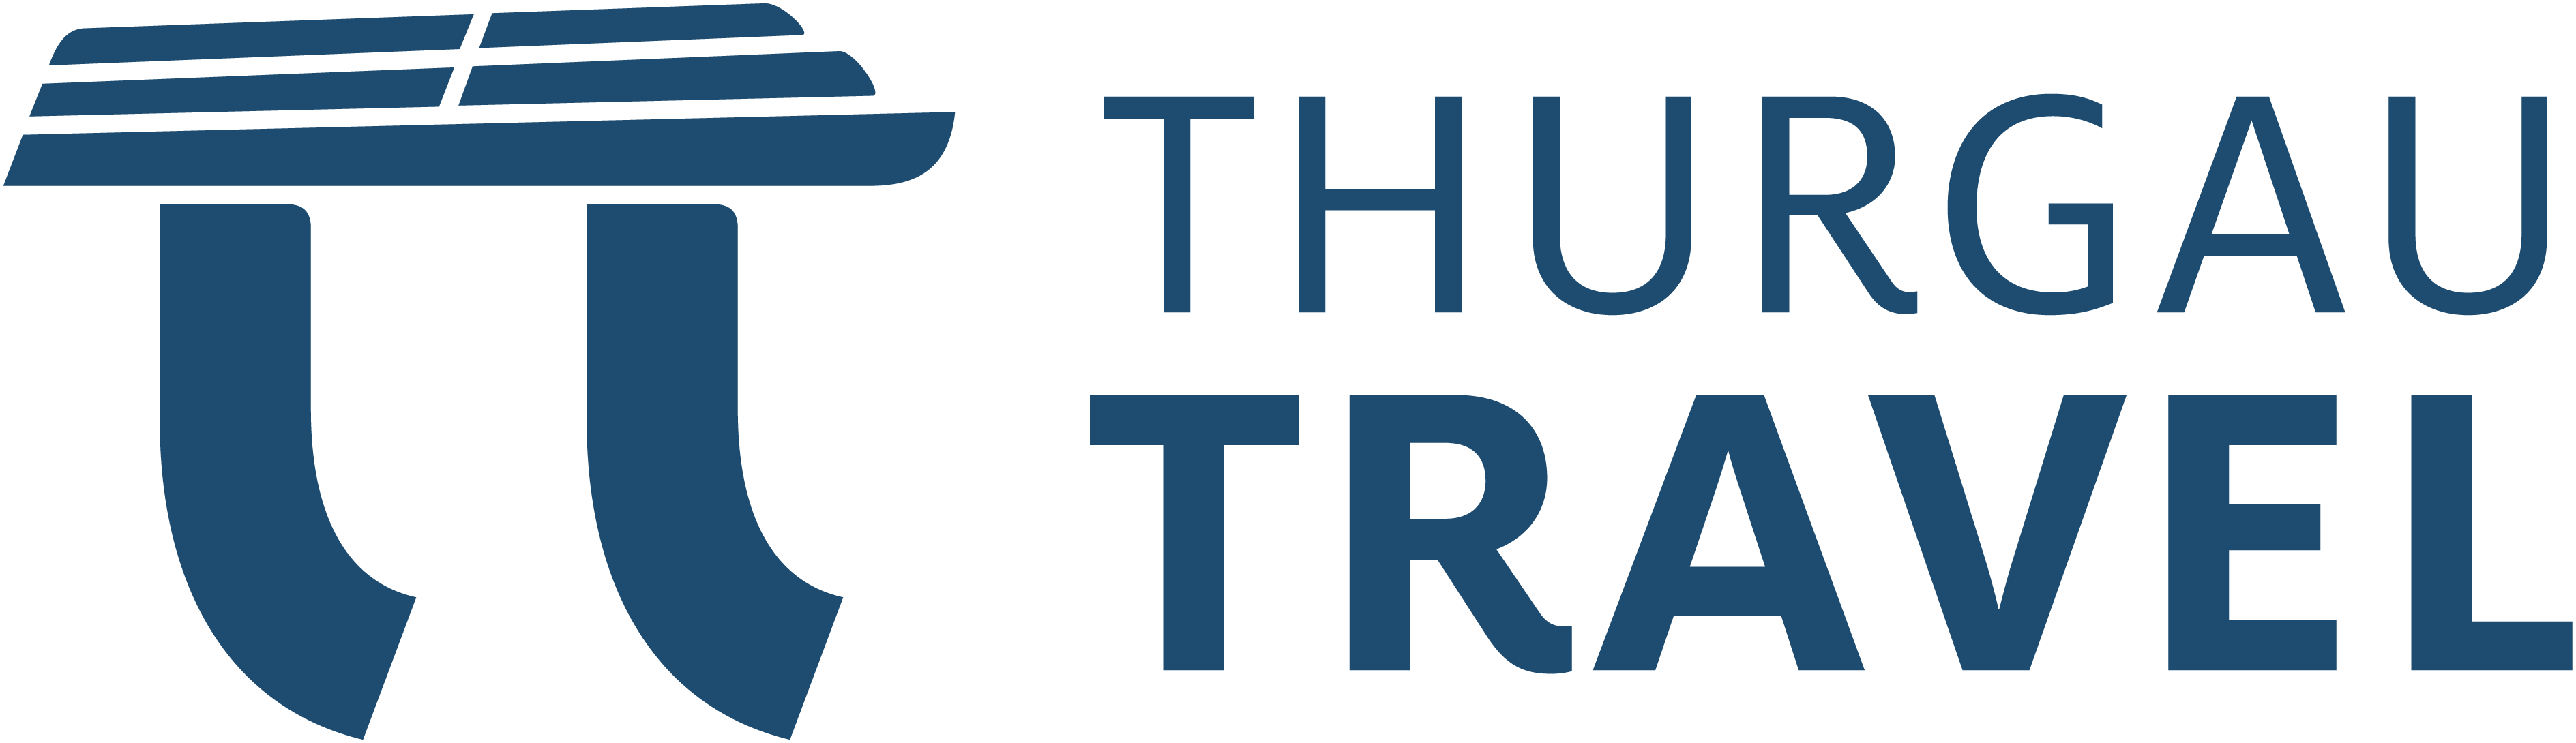 Thurgau Travel Logo